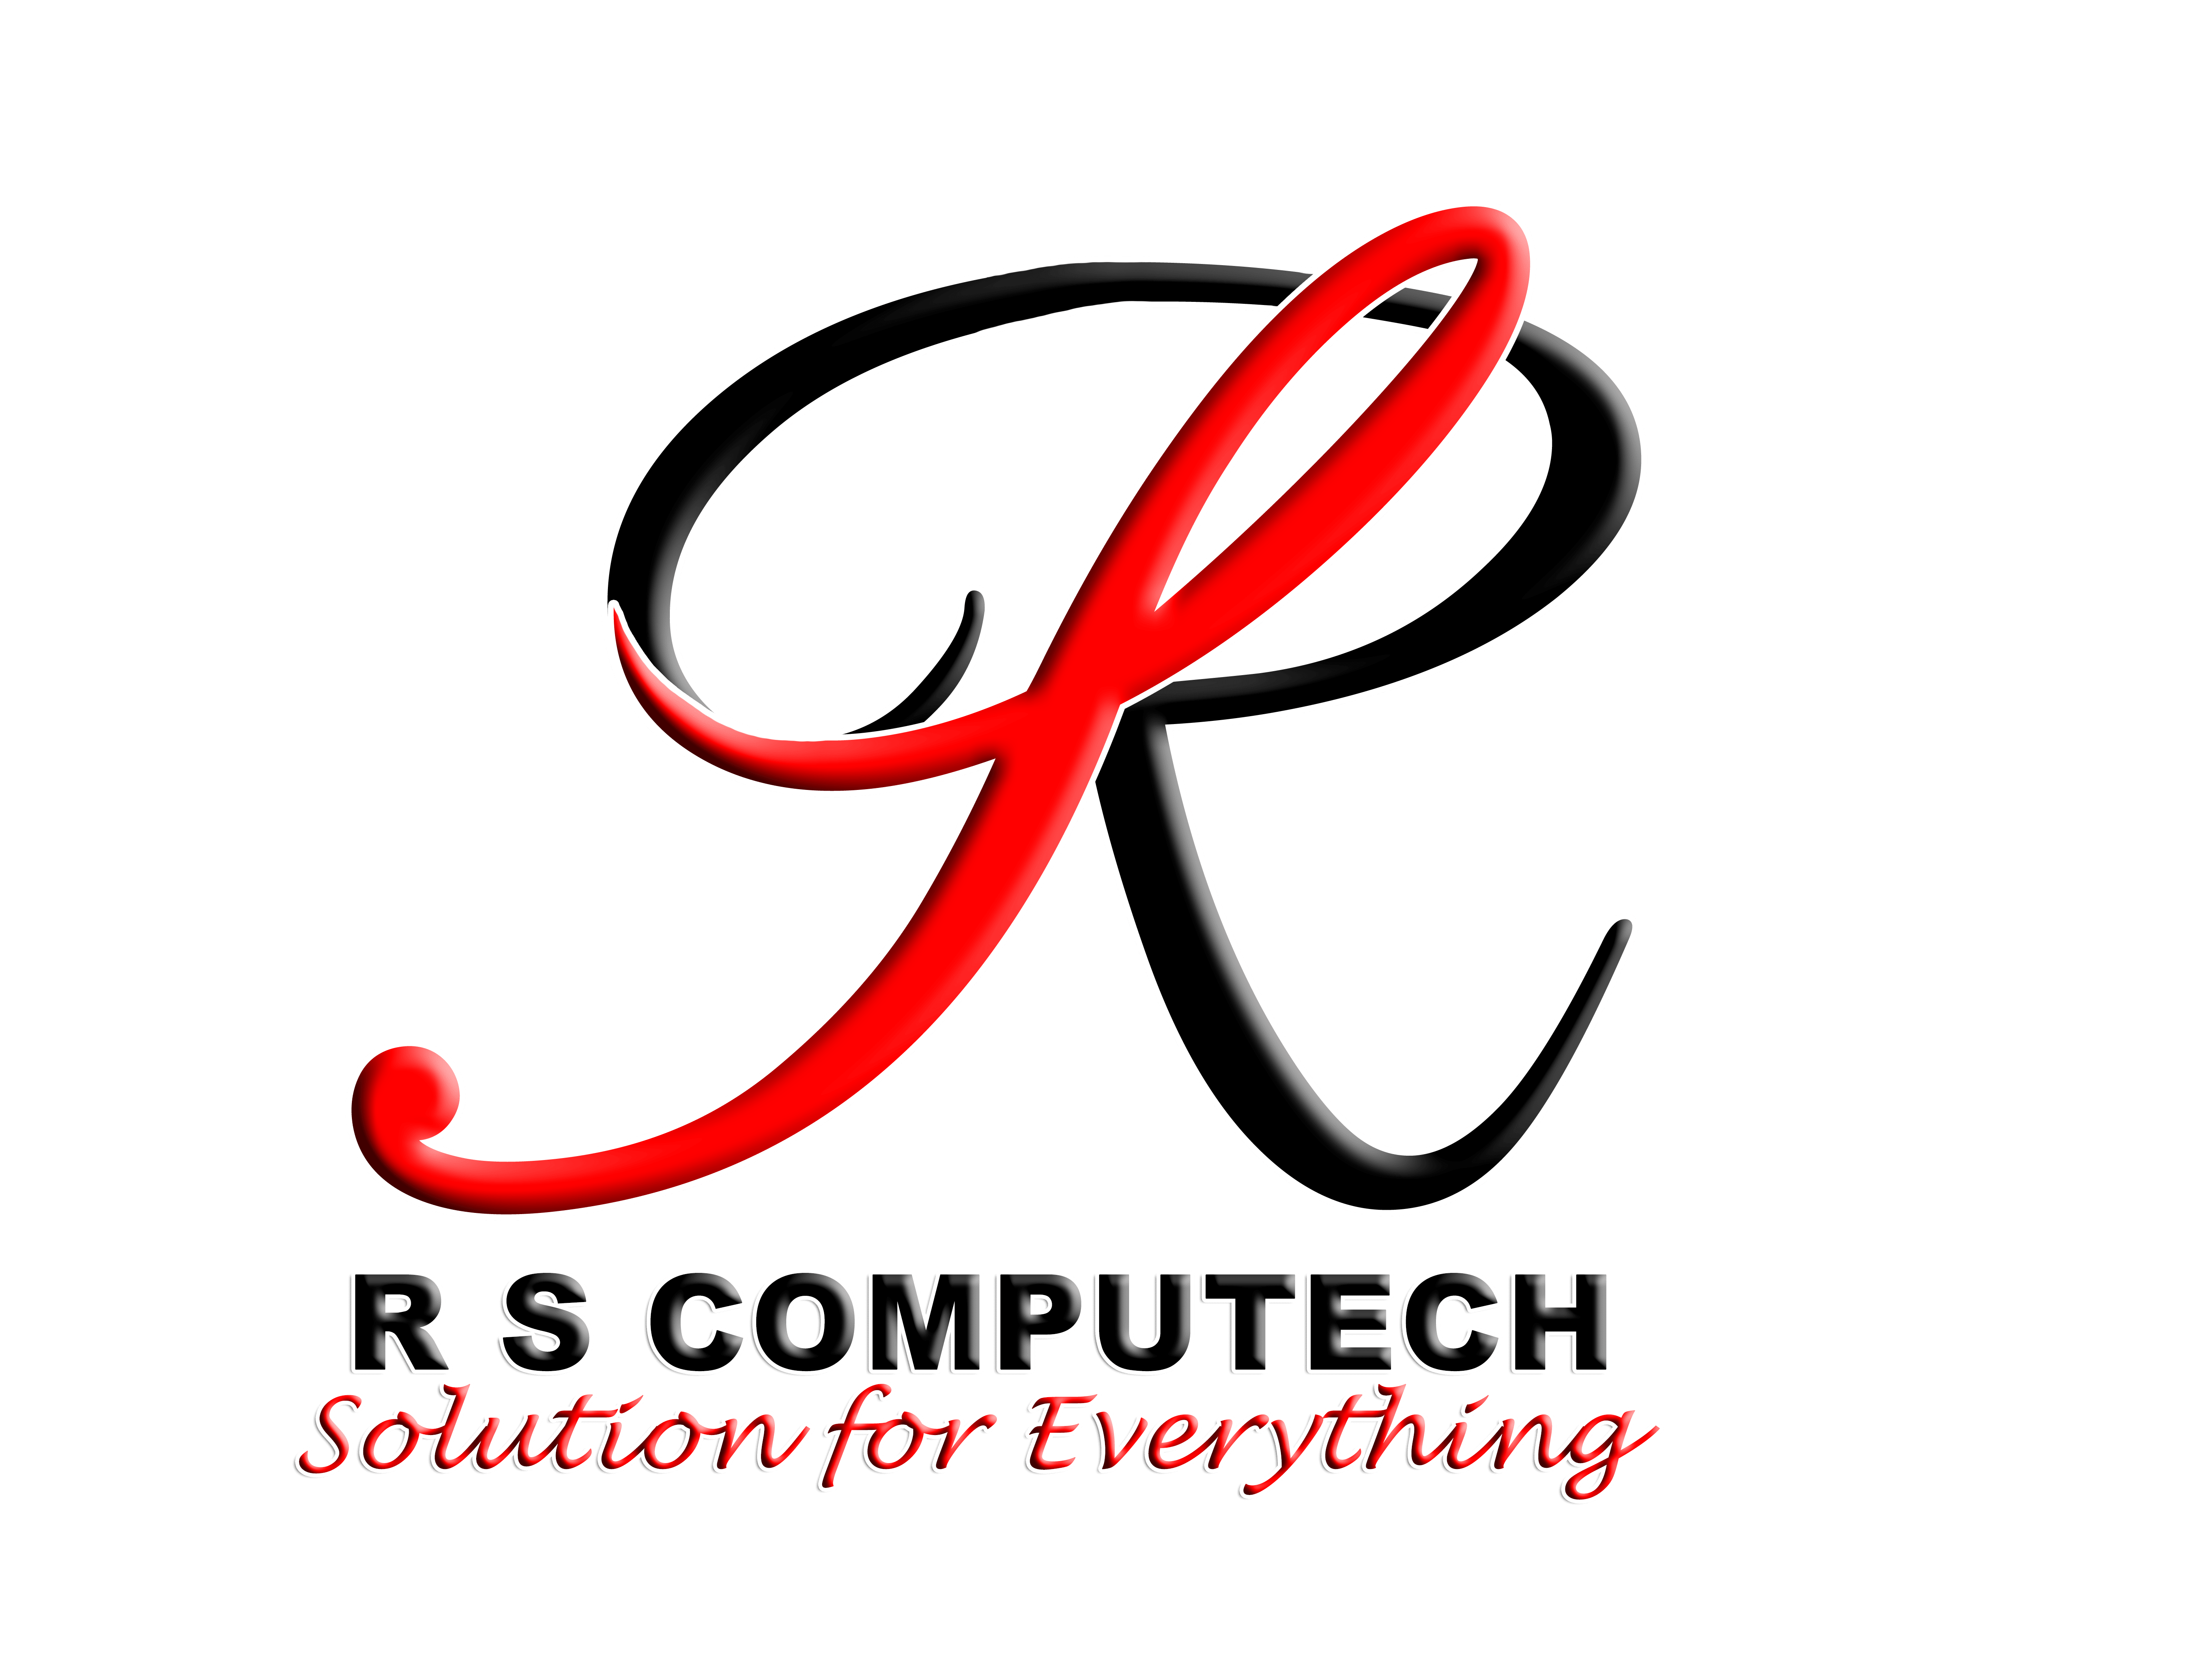 R S COMPUTECH